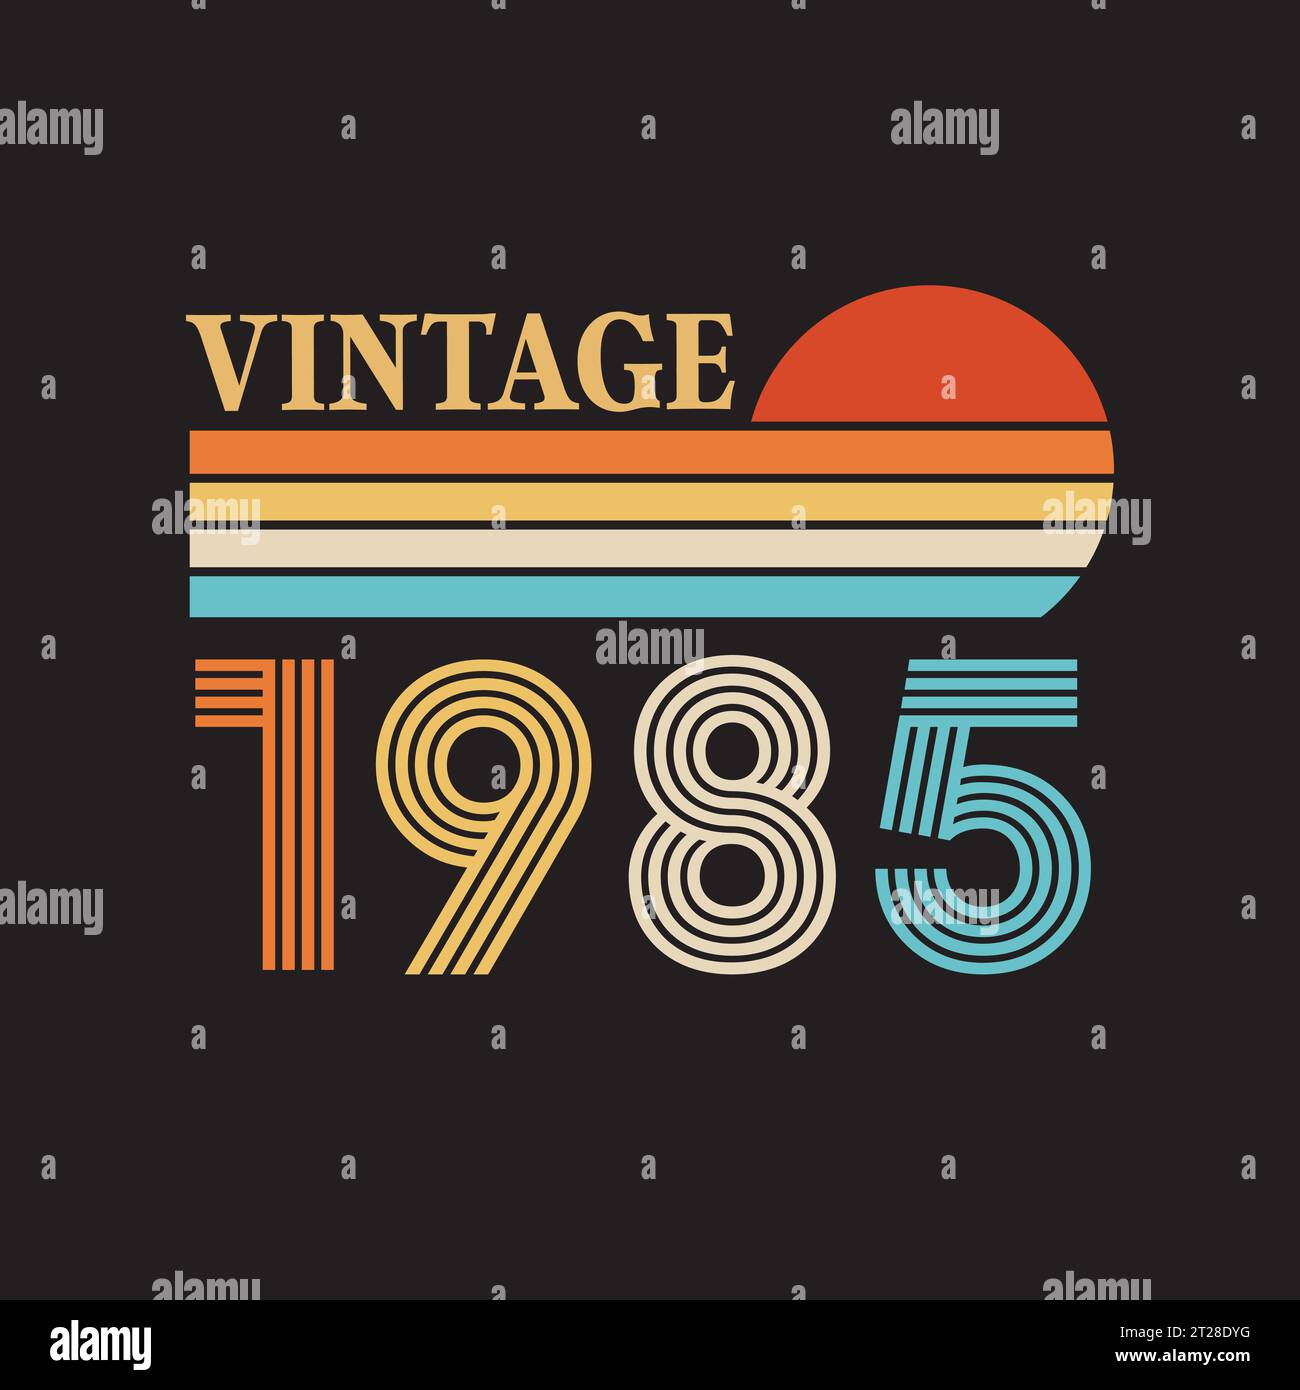 1985 vintage t shirt design vector Stock Vector